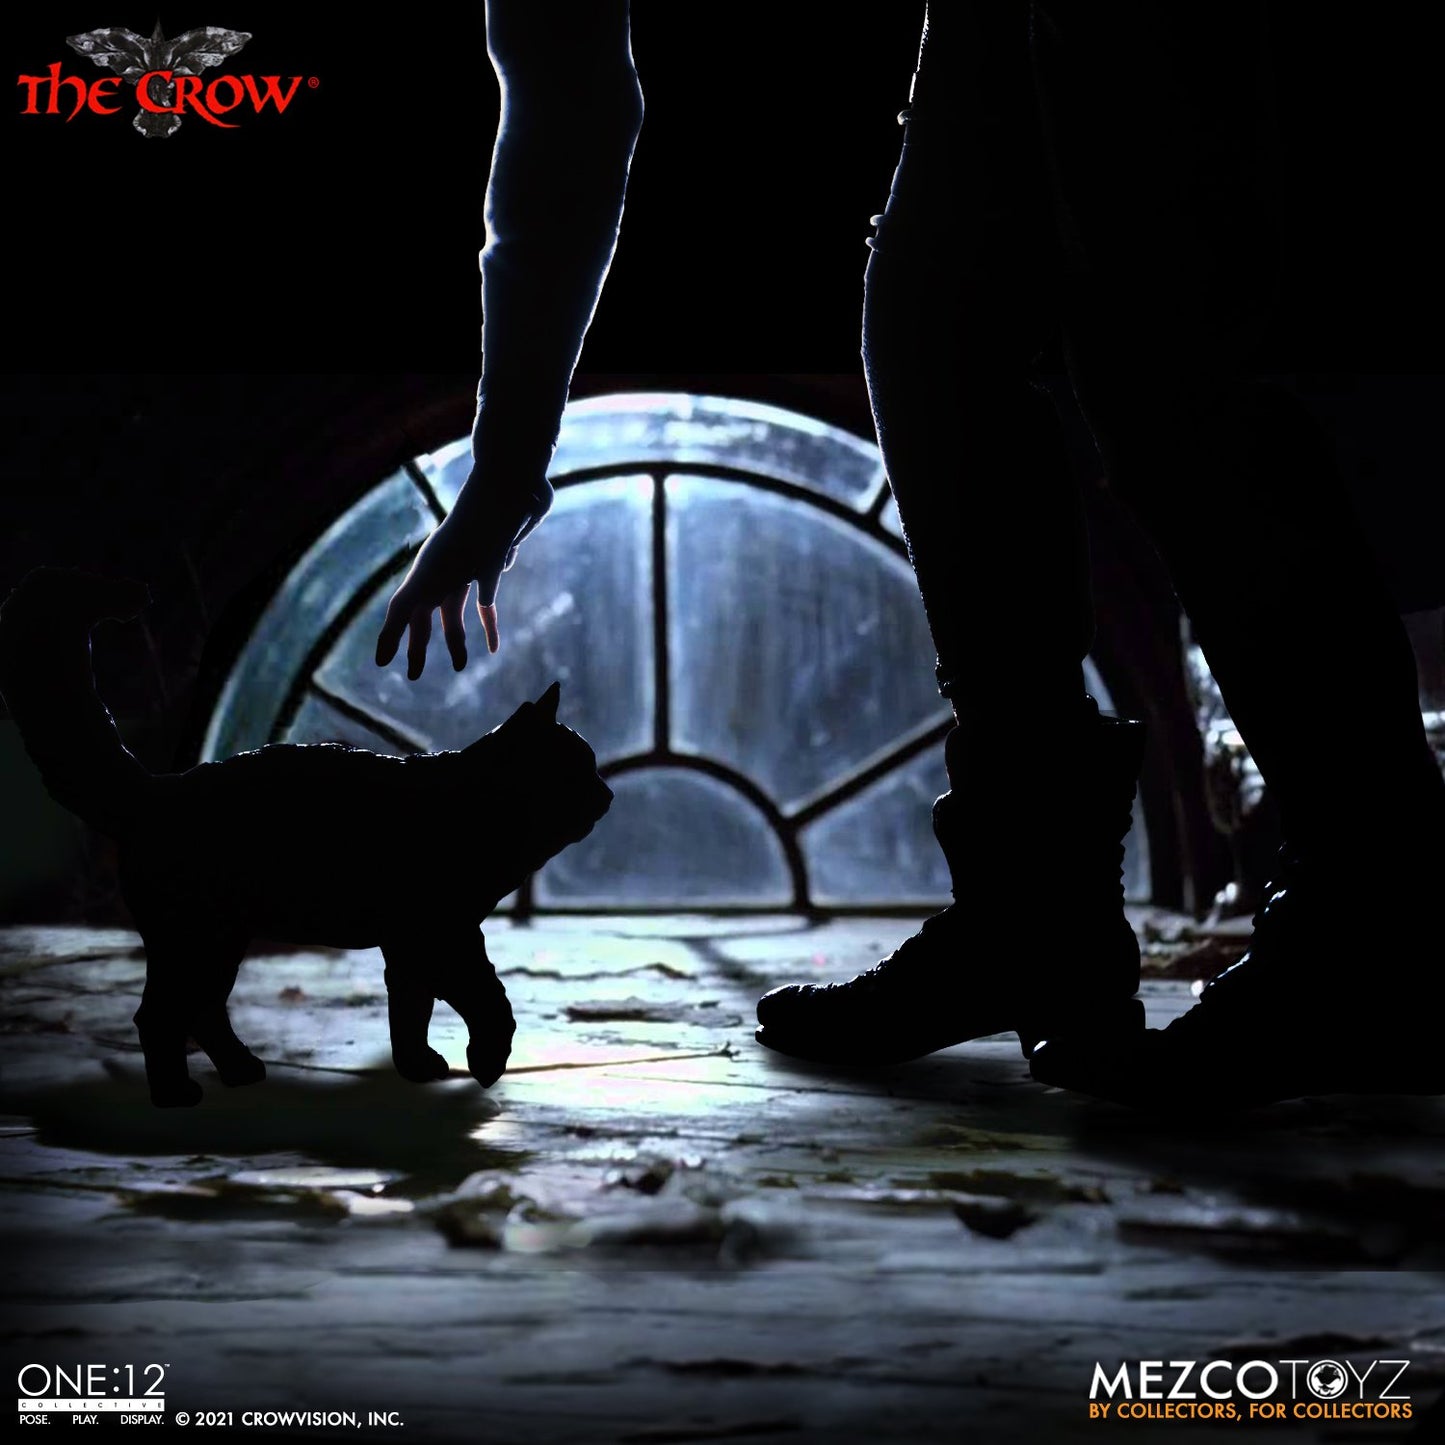 [PREORDER] MEZCO One 12 Collective THE CROW